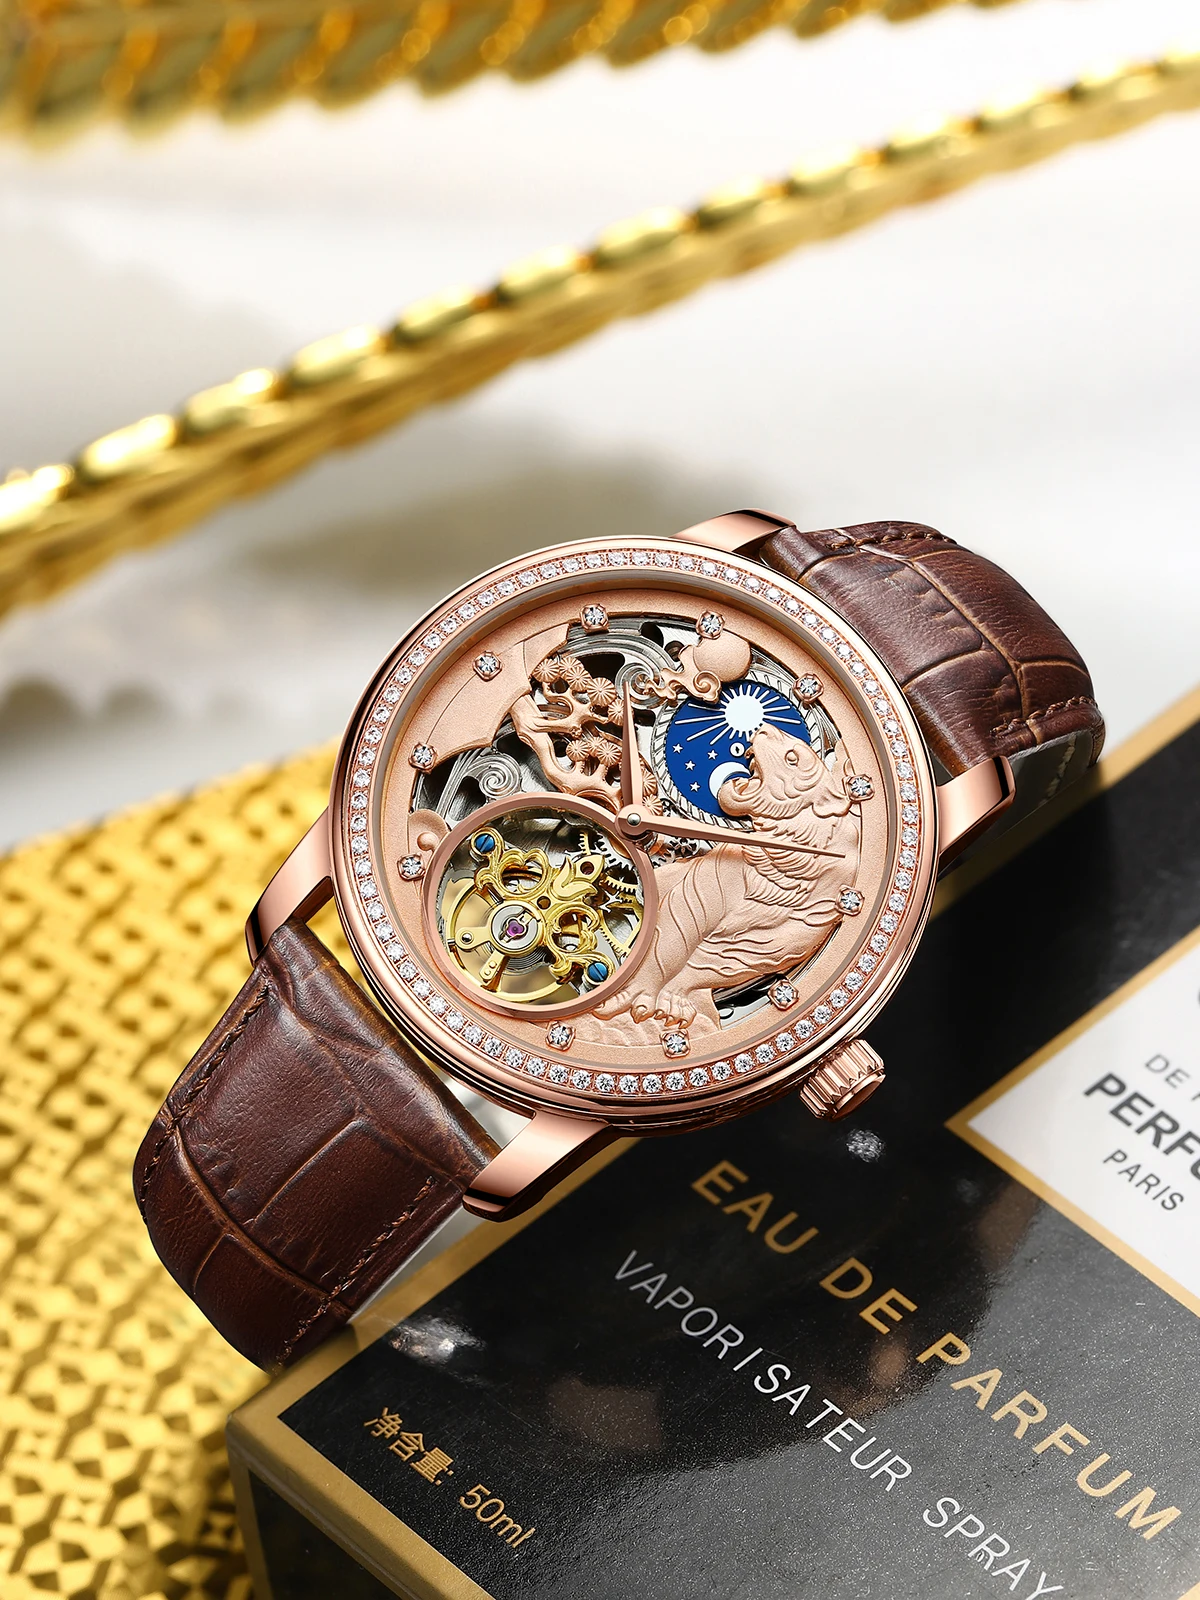 APNUONR Golden Tiger Watch Fashion Classic Diamond Men's Watch Mechanical Automatic Winding 2022 New Luxury Watch enlarge